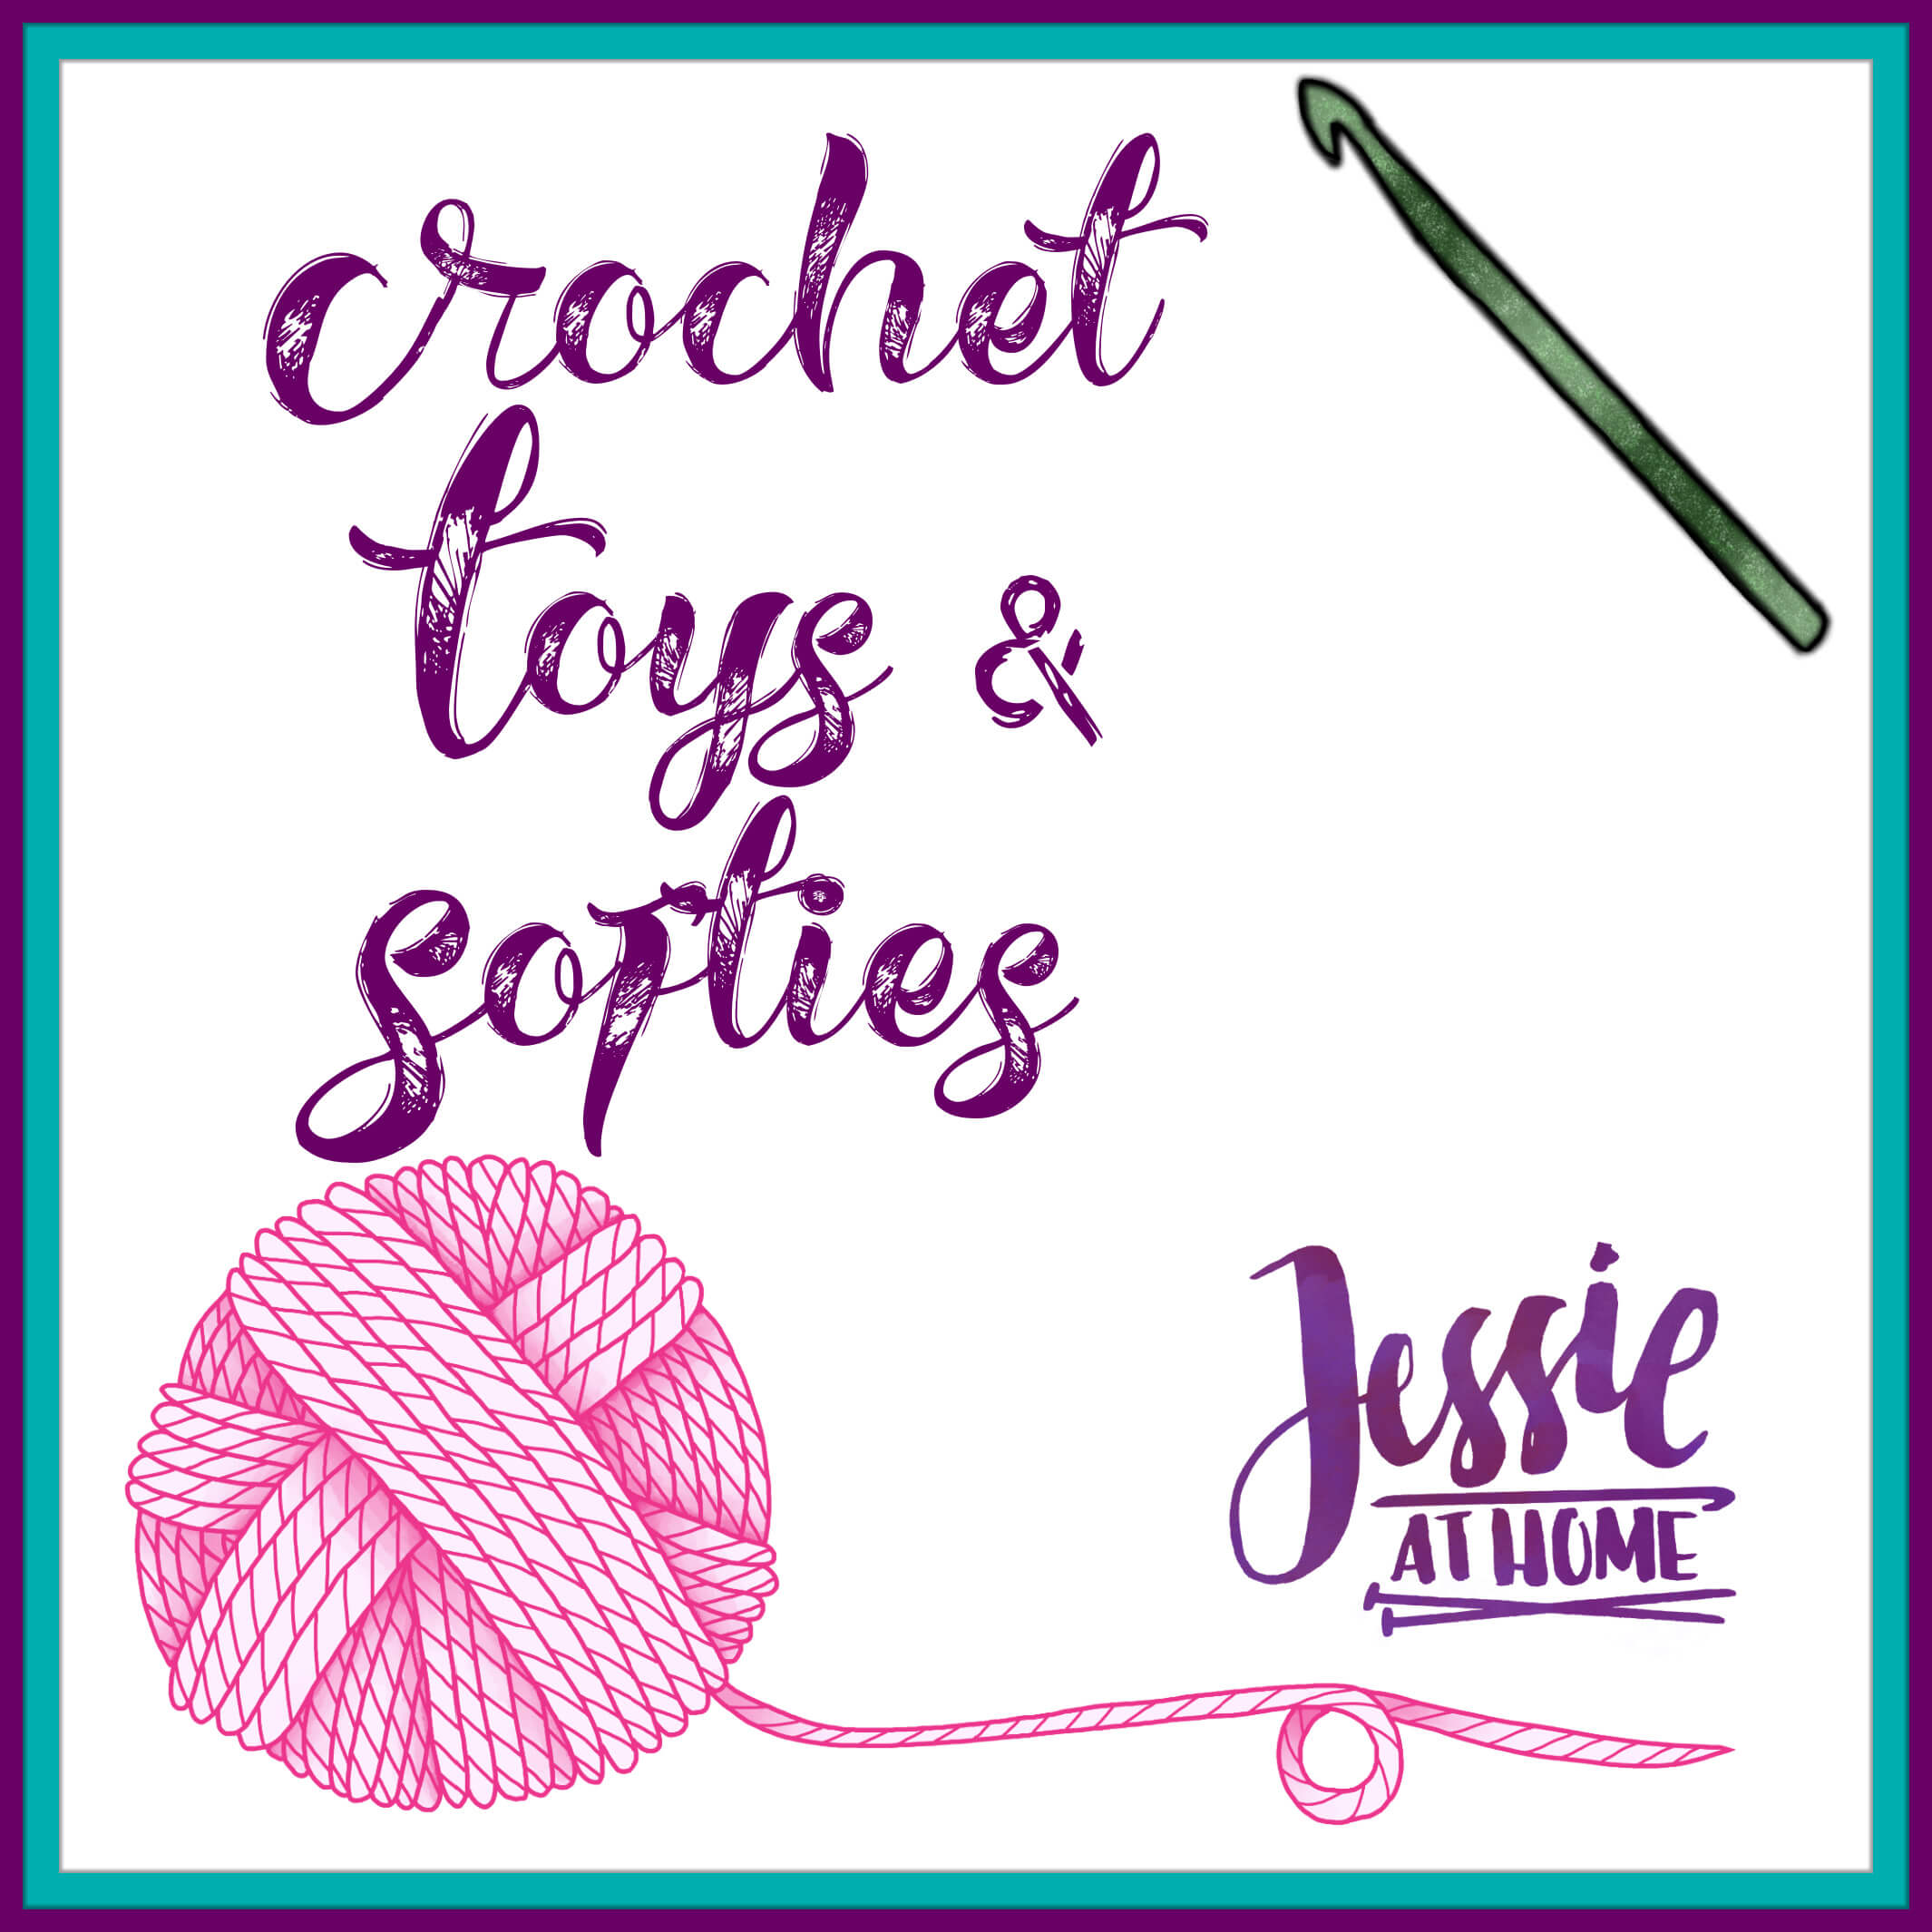 Crochet Toys & Softies Menu on Jessie At Home